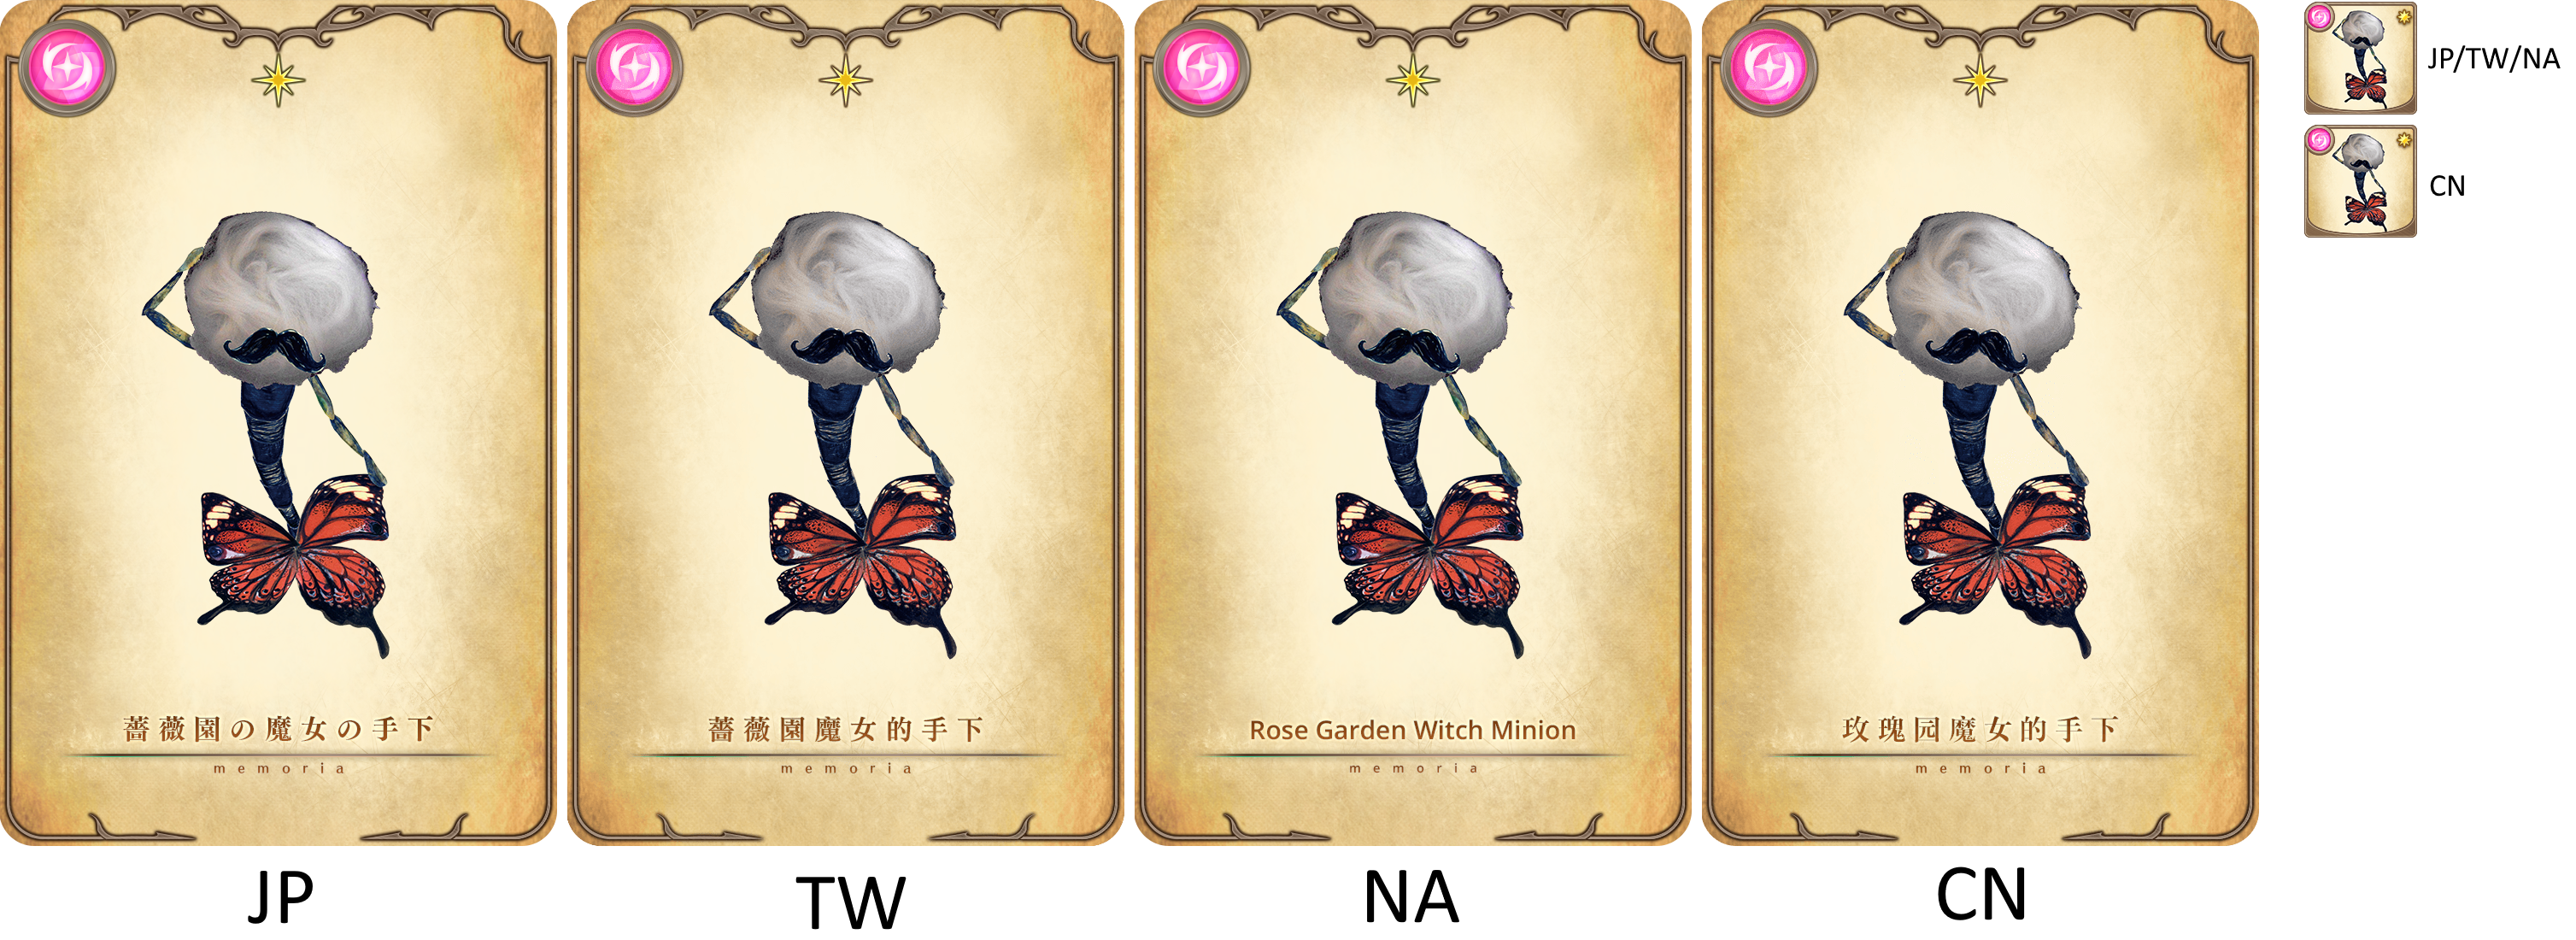 Minion of the Rose Garden Witch [memoria_1001]